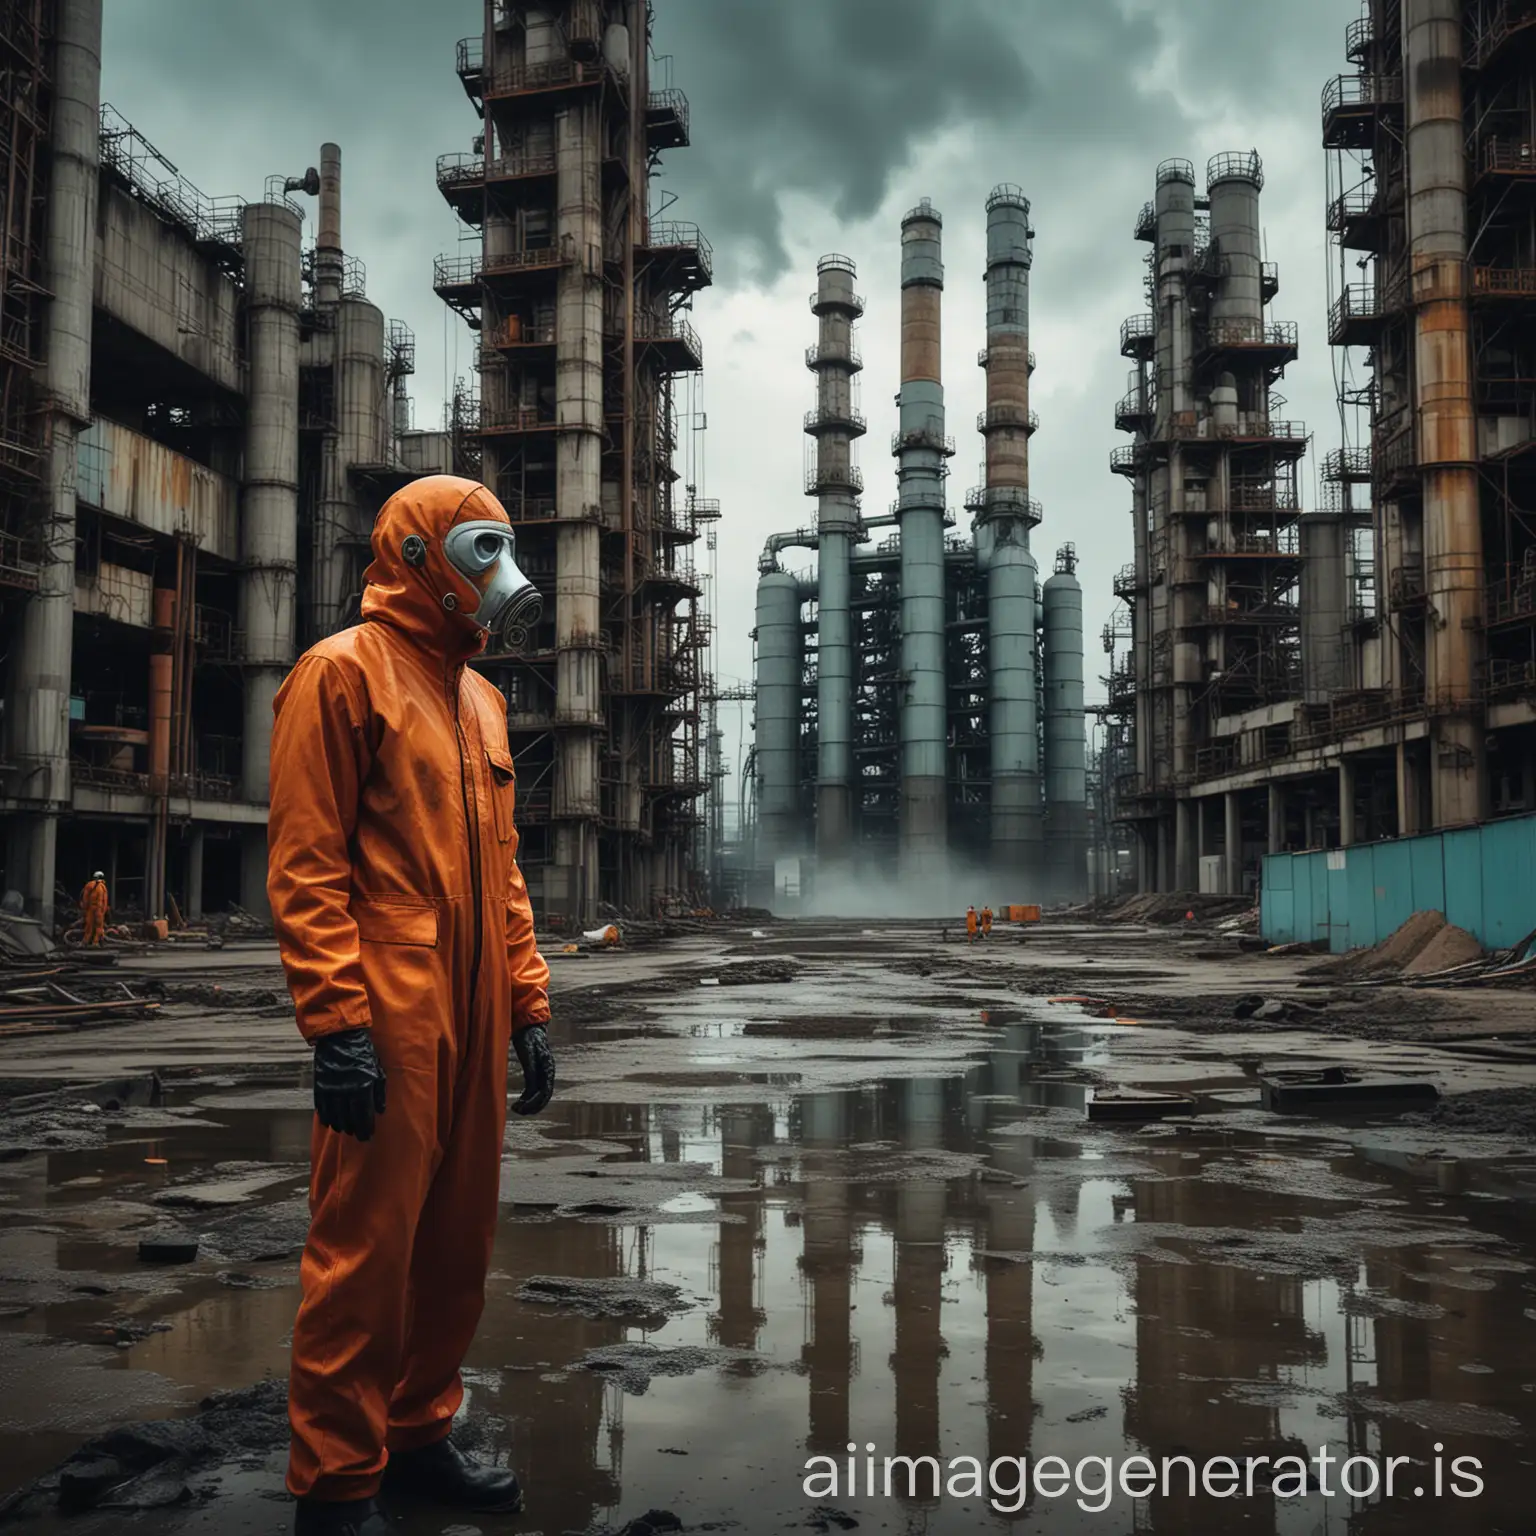 Surreal-Aqua-Man-in-Industrial-Landscape